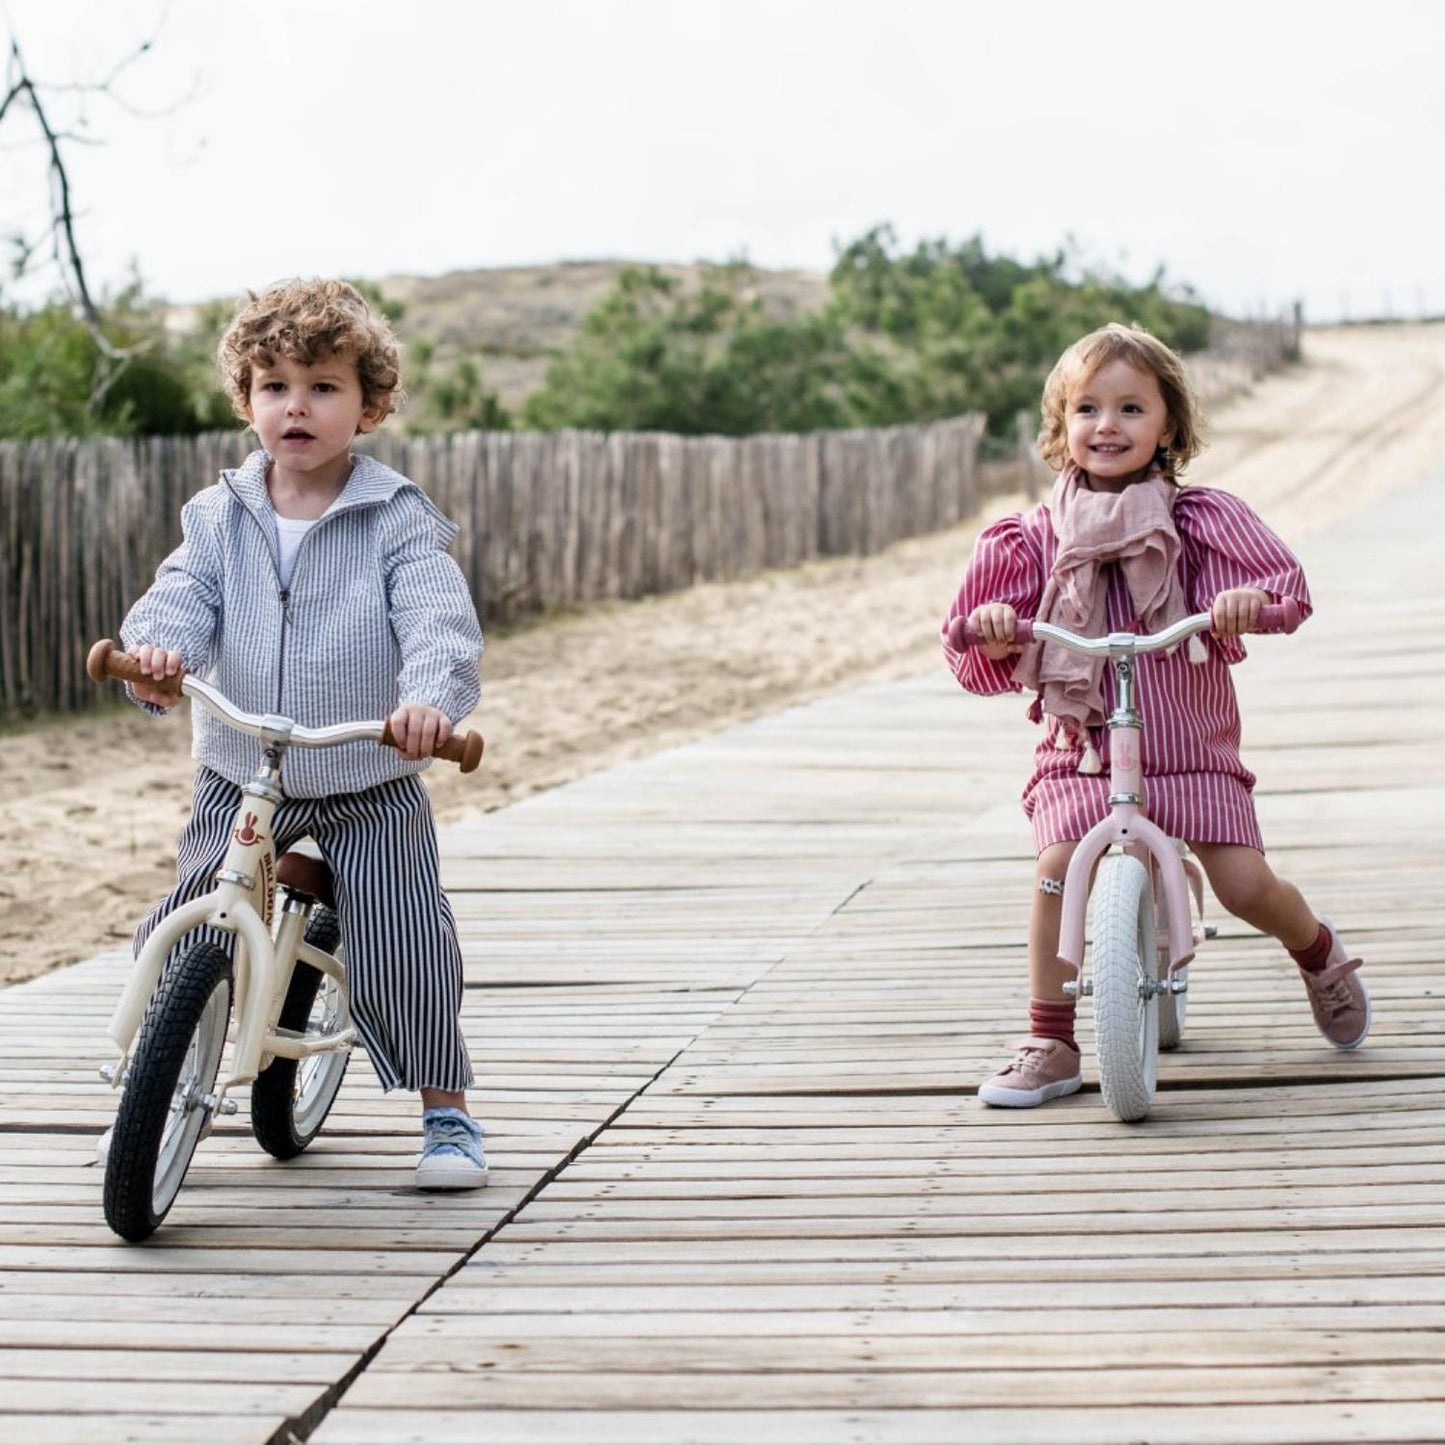 Balance Bike | Beige | Bikes & Scooters for Kids